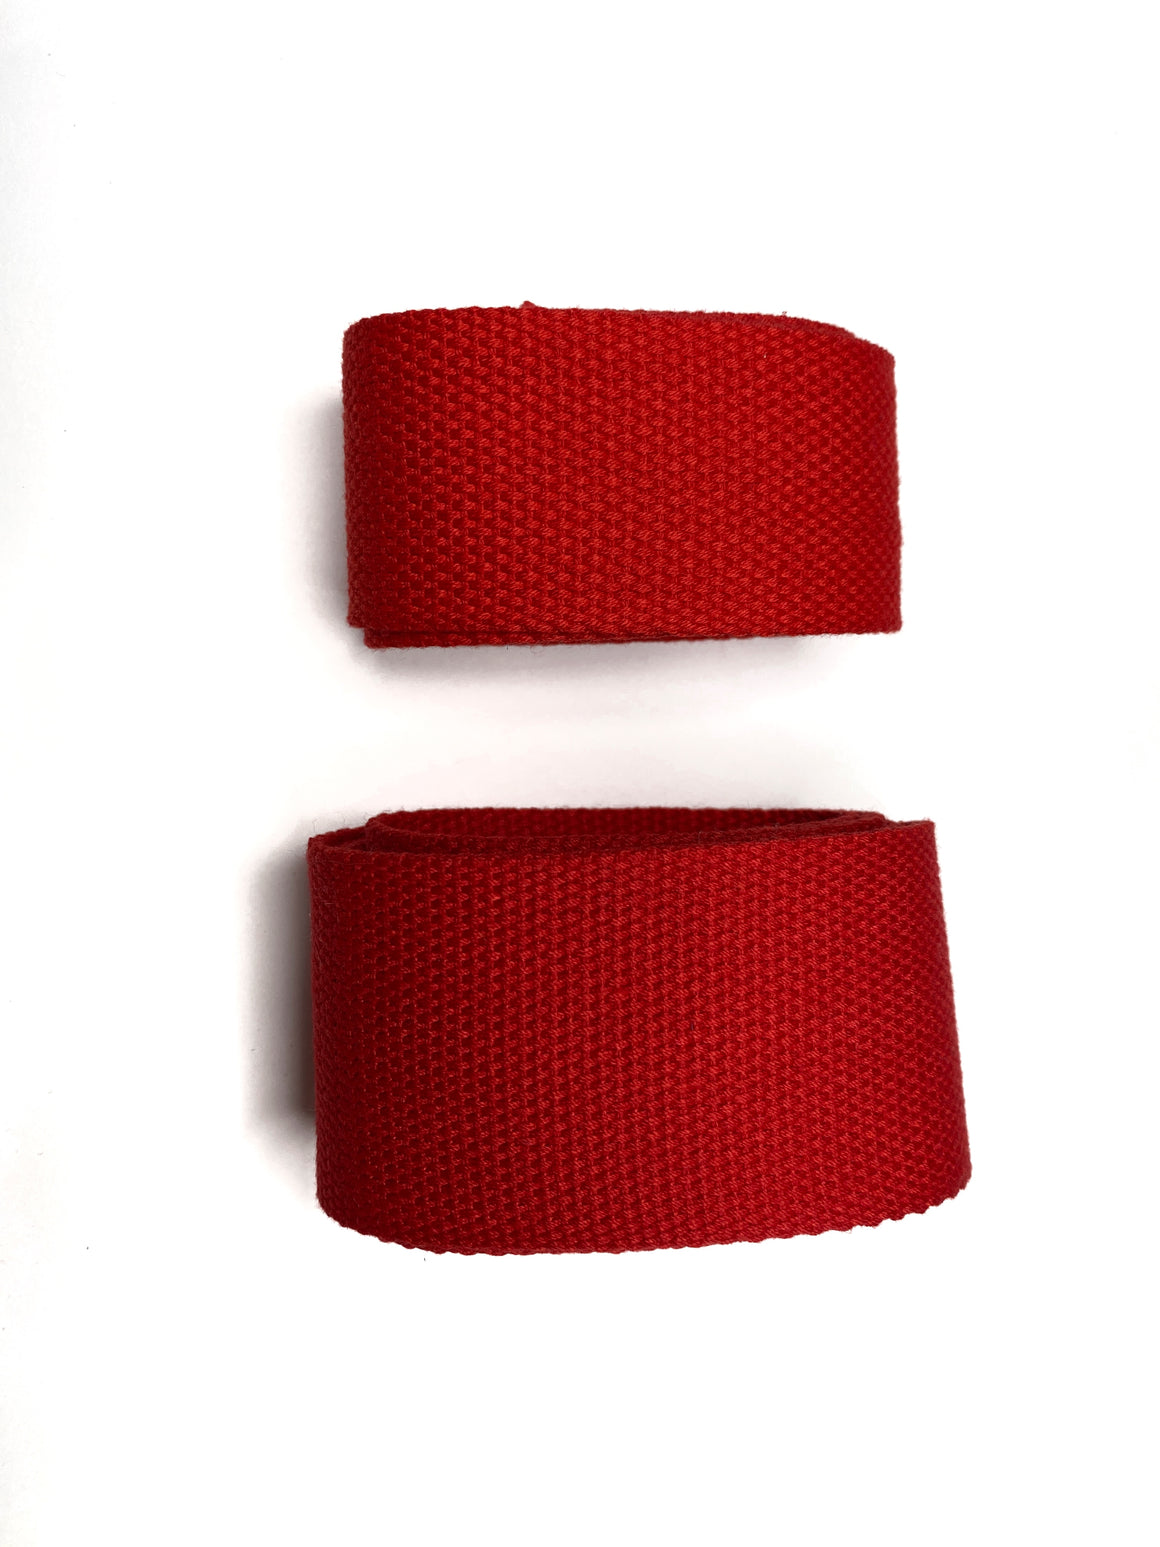 Poppy Red - 100% Cotton Strap / Webbing